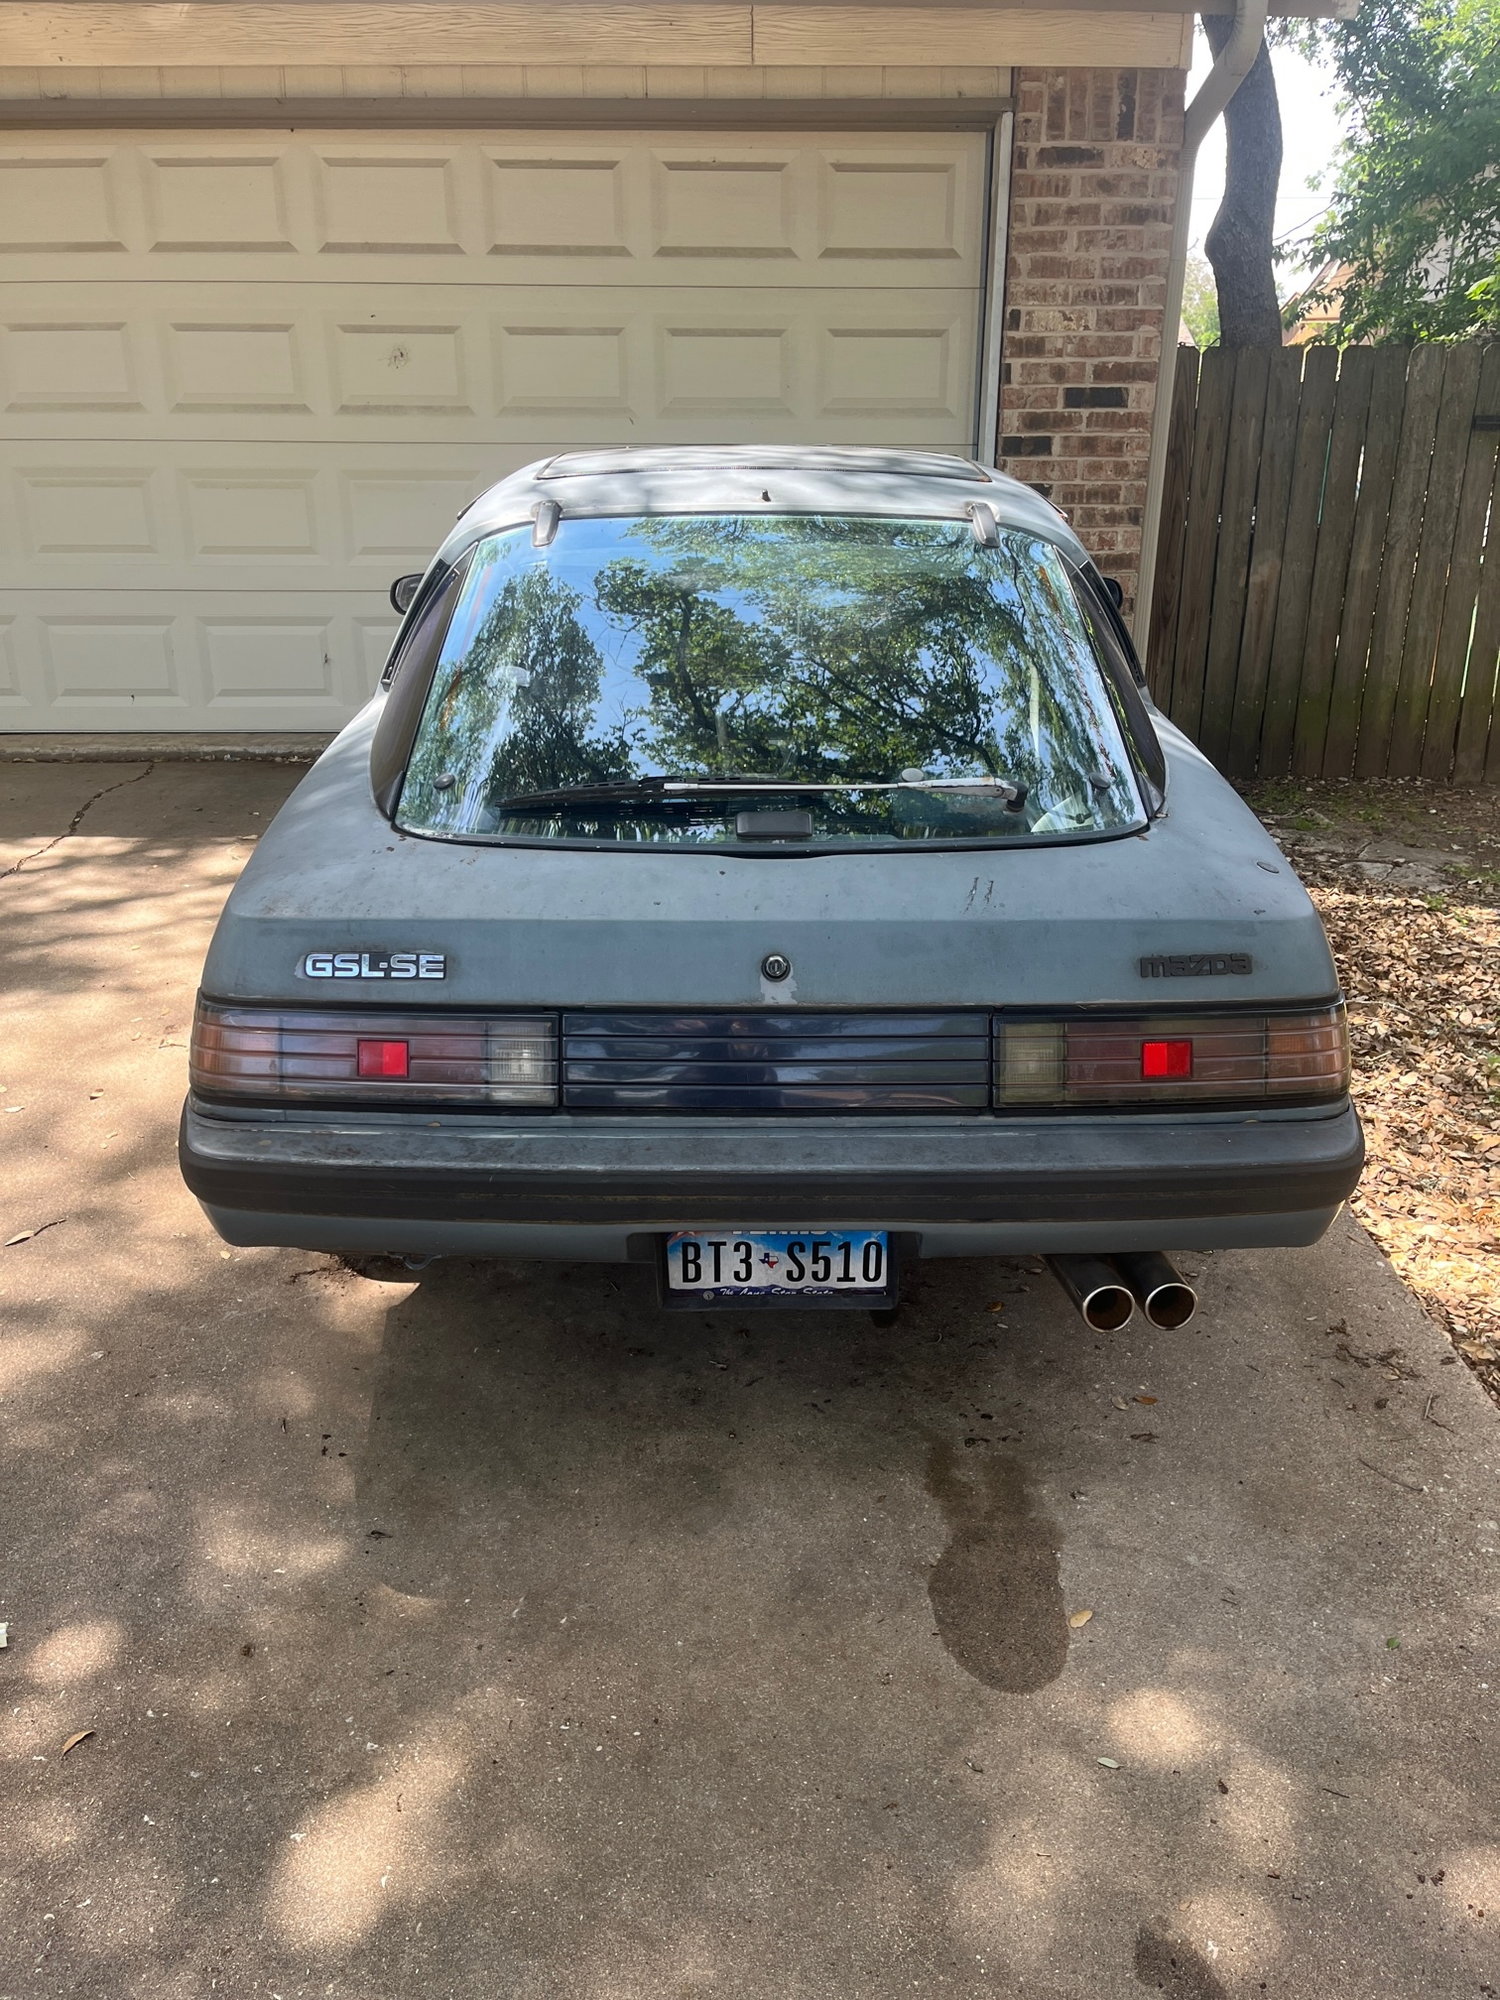 1985 Mazda RX-7 - Selling my 1985 GSL-SE Tender Blue, 161K $3500 (Austin,TX) - Used - Austin, TX 78749, United States